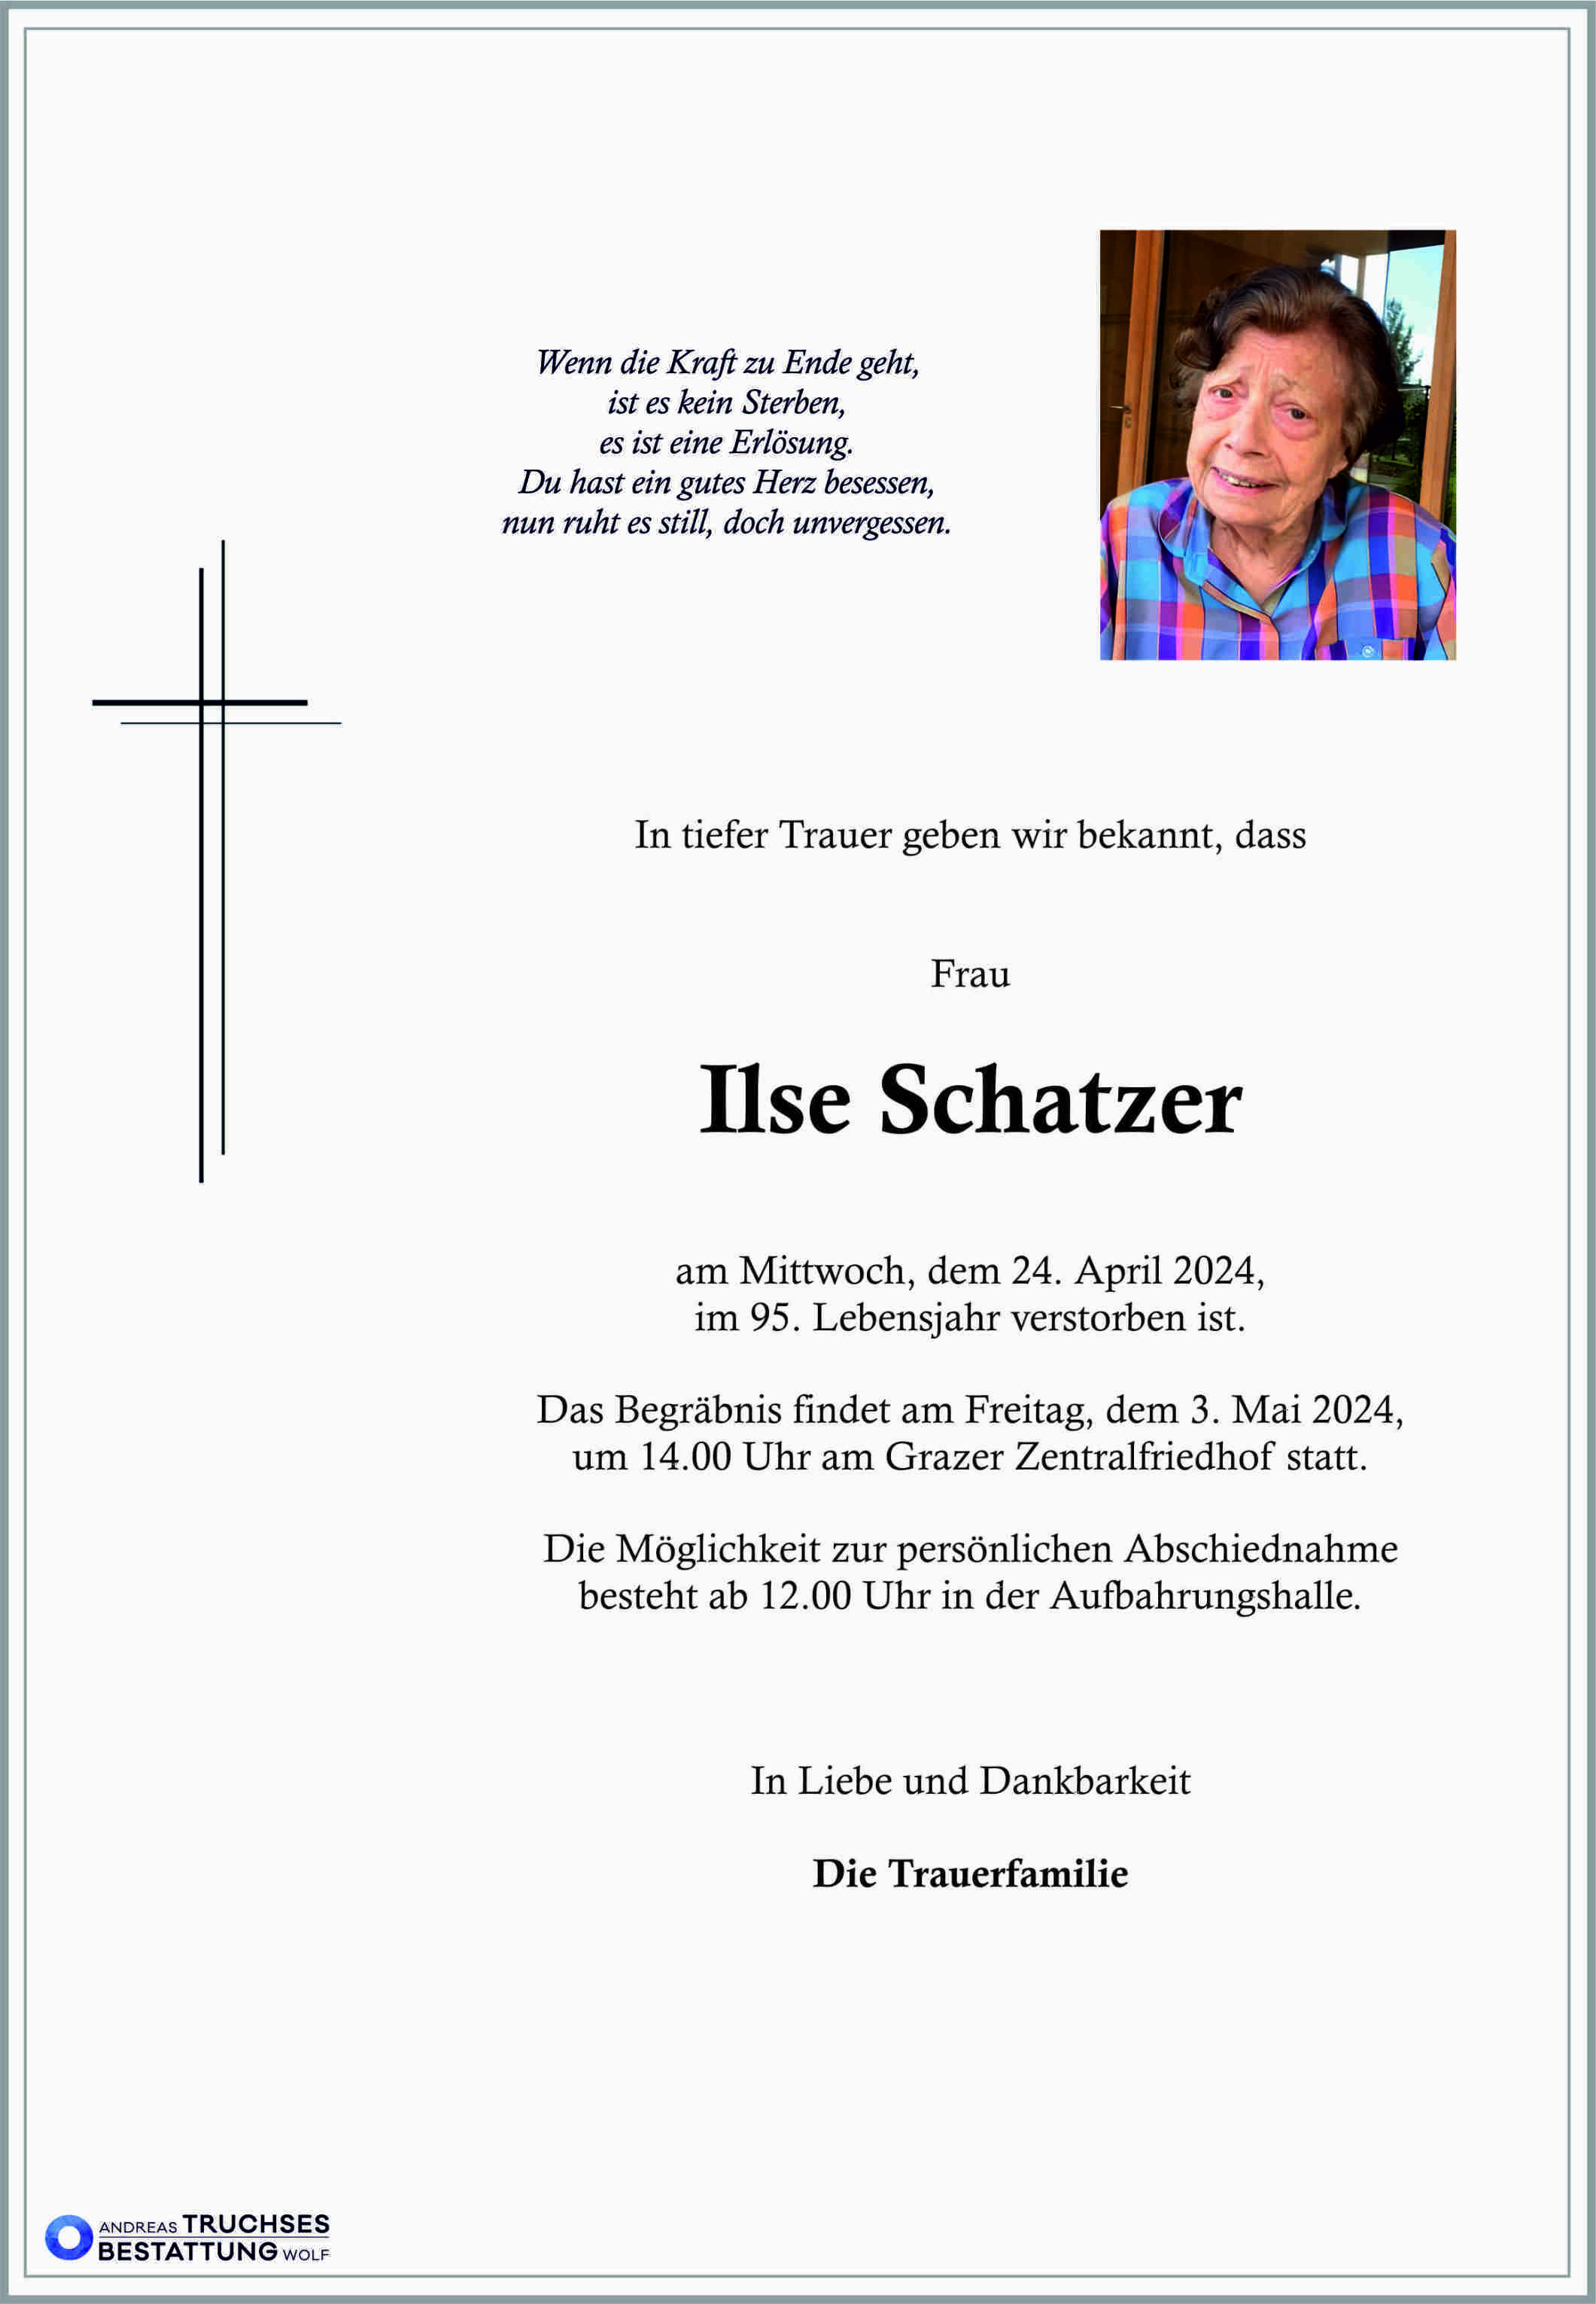 Ilse Schatzer